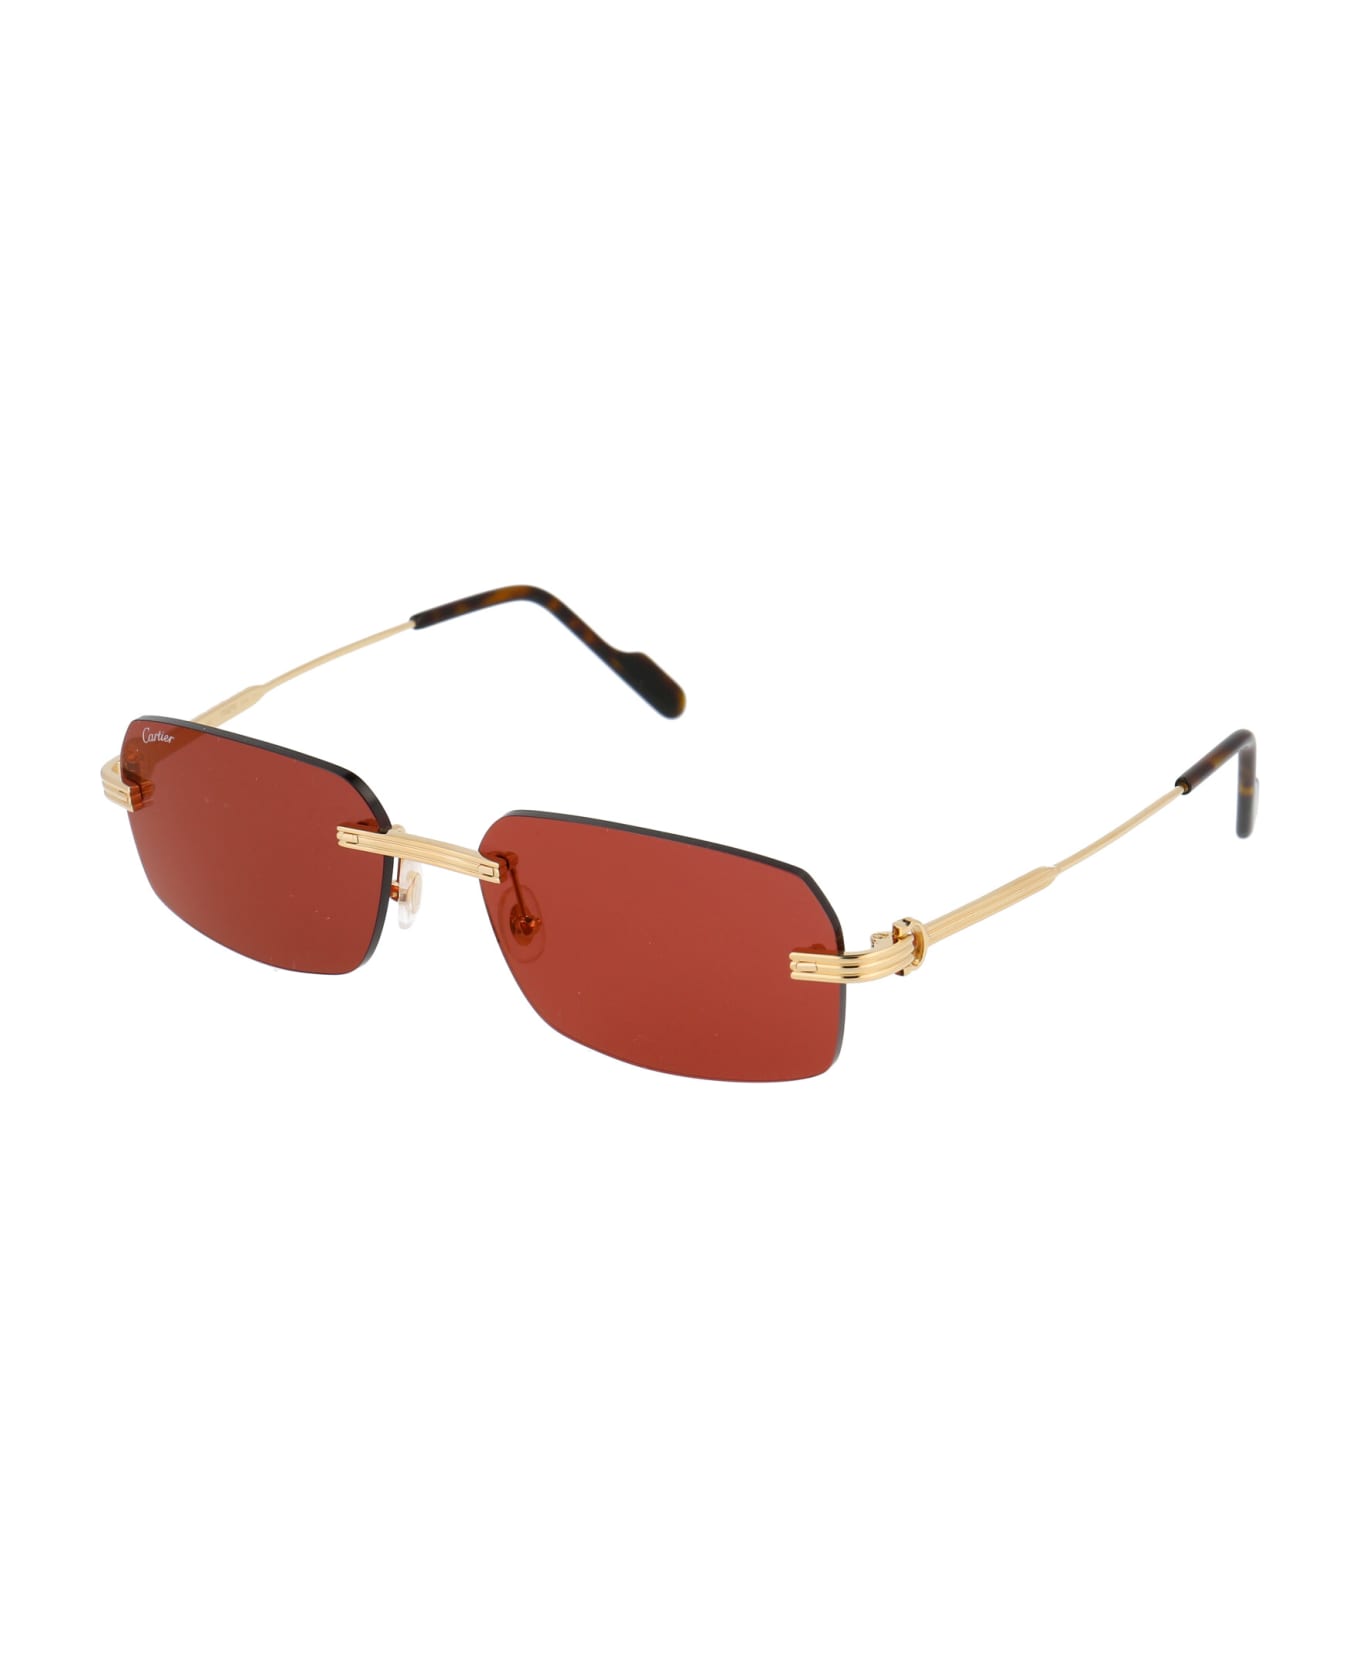 Cartier Eyewear Ct0271s Sunglasses - 004 GOLD GOLD RED